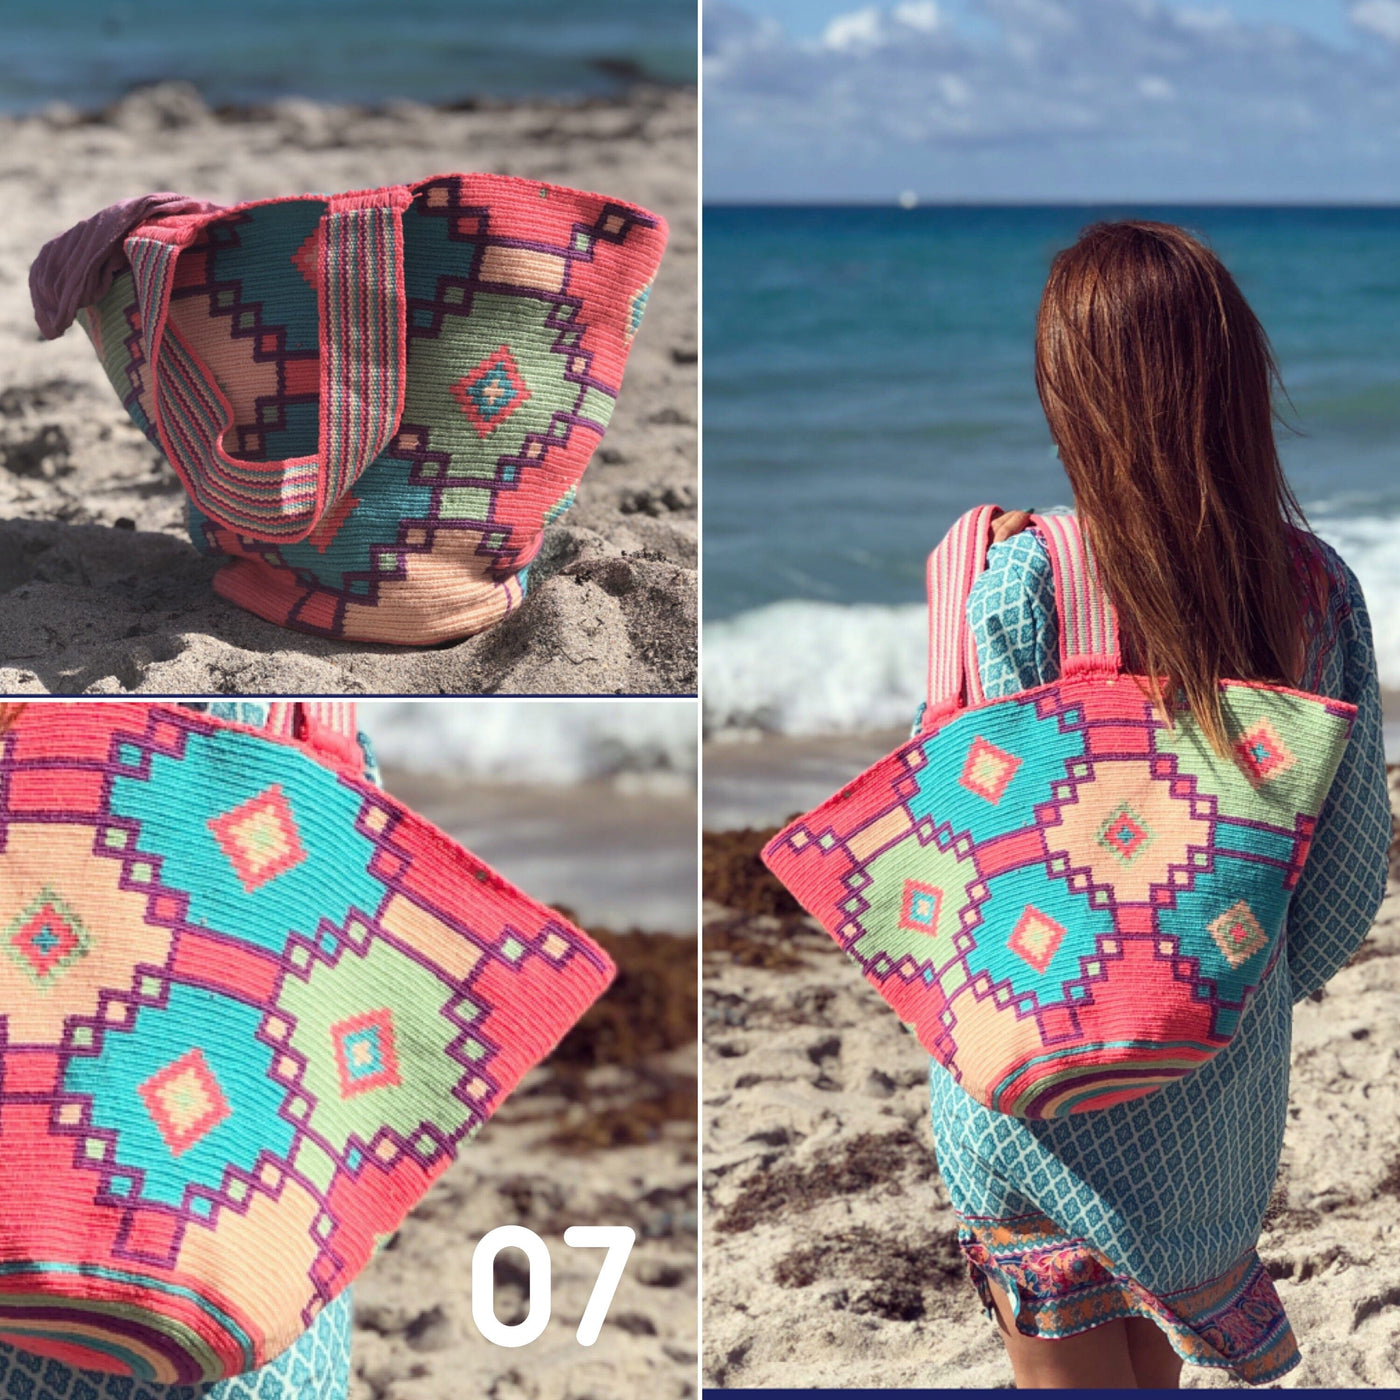 Coral-teal Summer Tote Bag | Beach Tote Bag for summer | Crochet Tote Bag | Colorful 4u